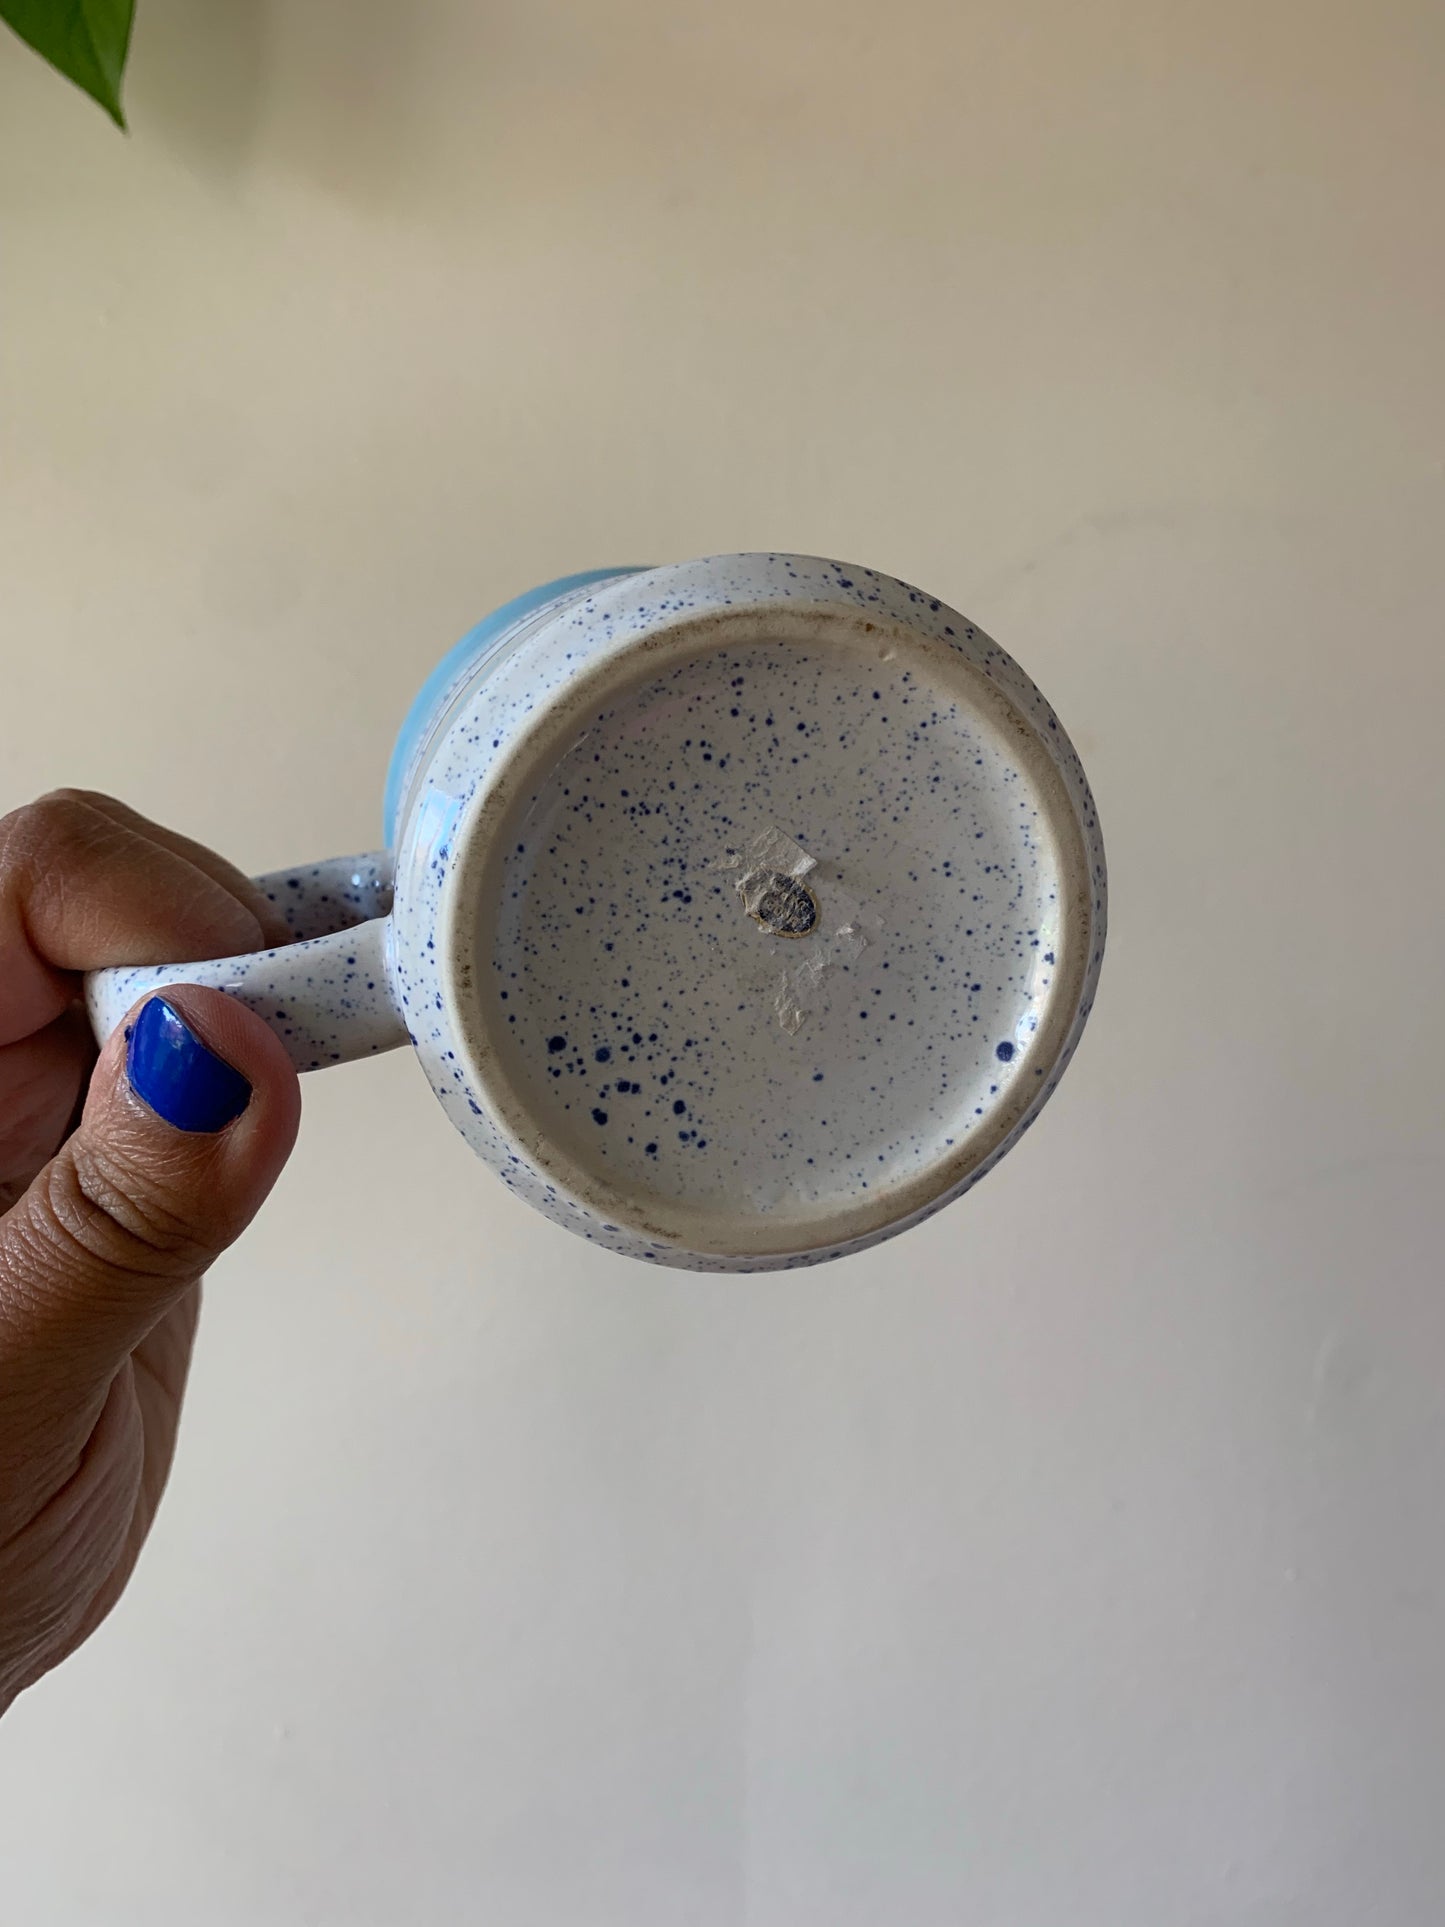 Nashville Blue and White Speckled Ceramic Mug